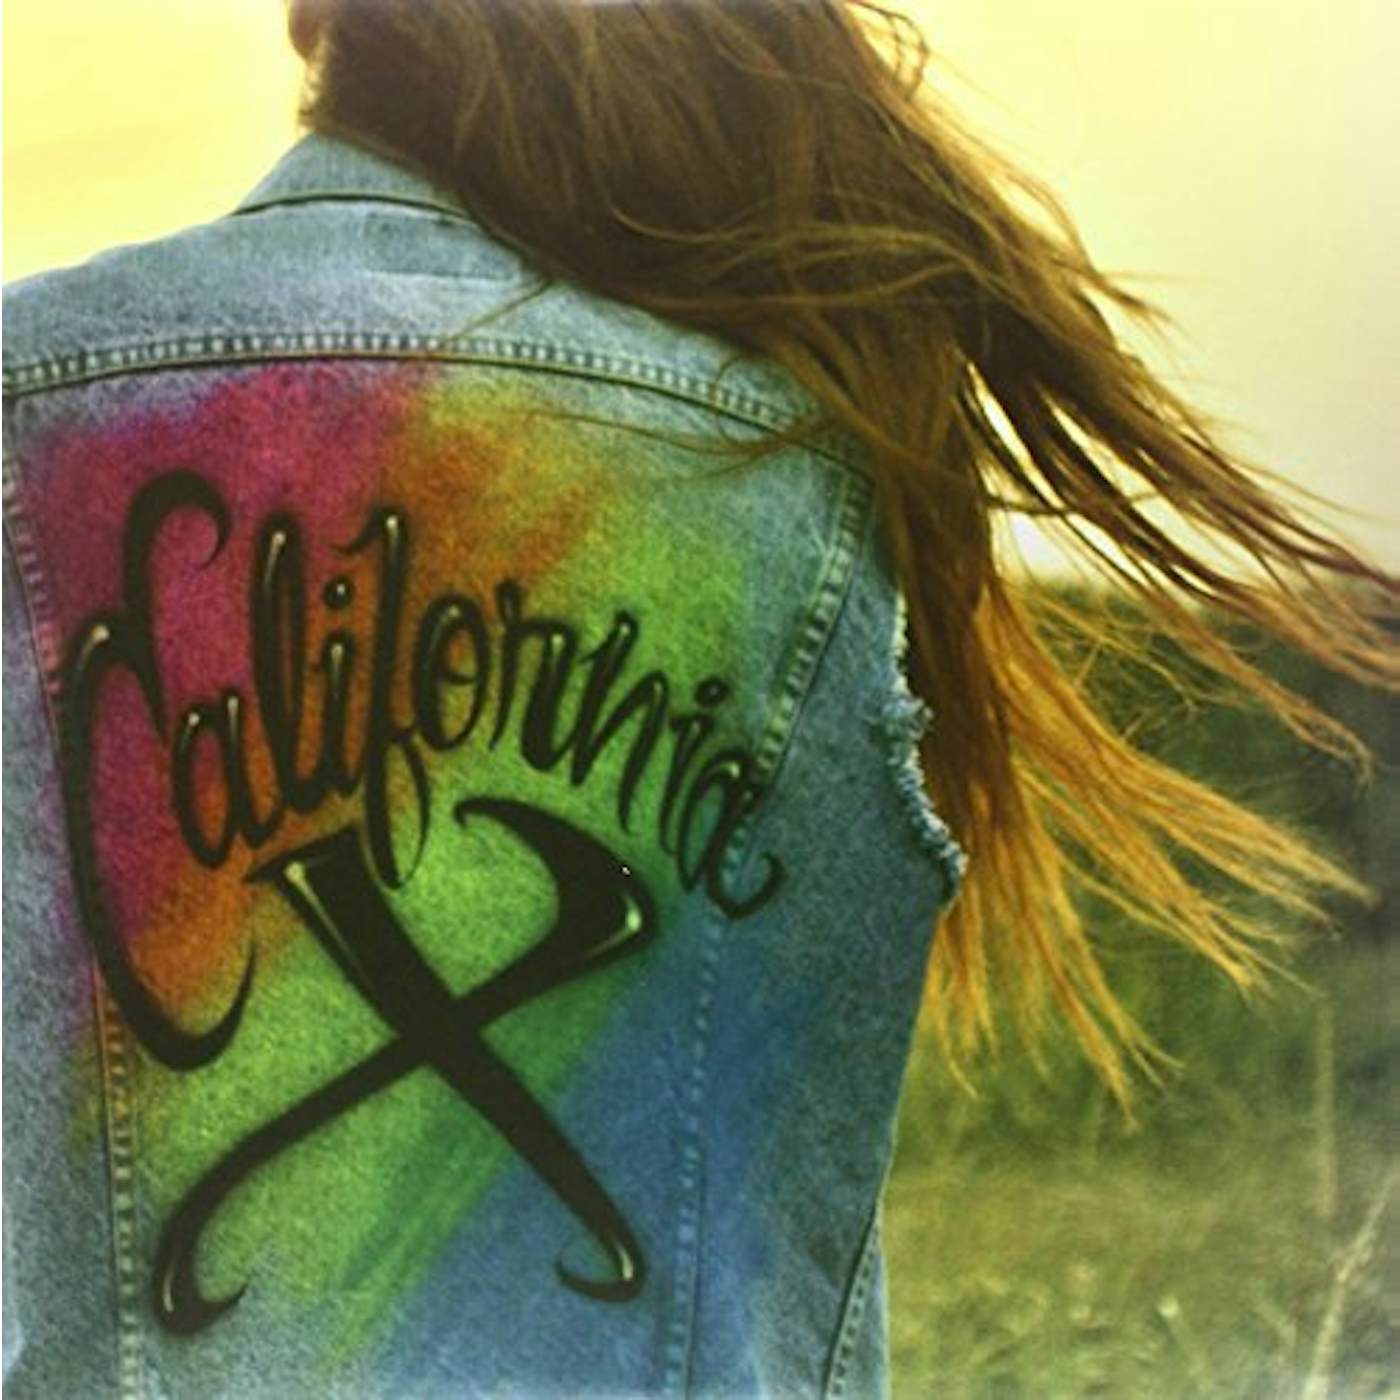 CALIFORNIA X Vinyl Record